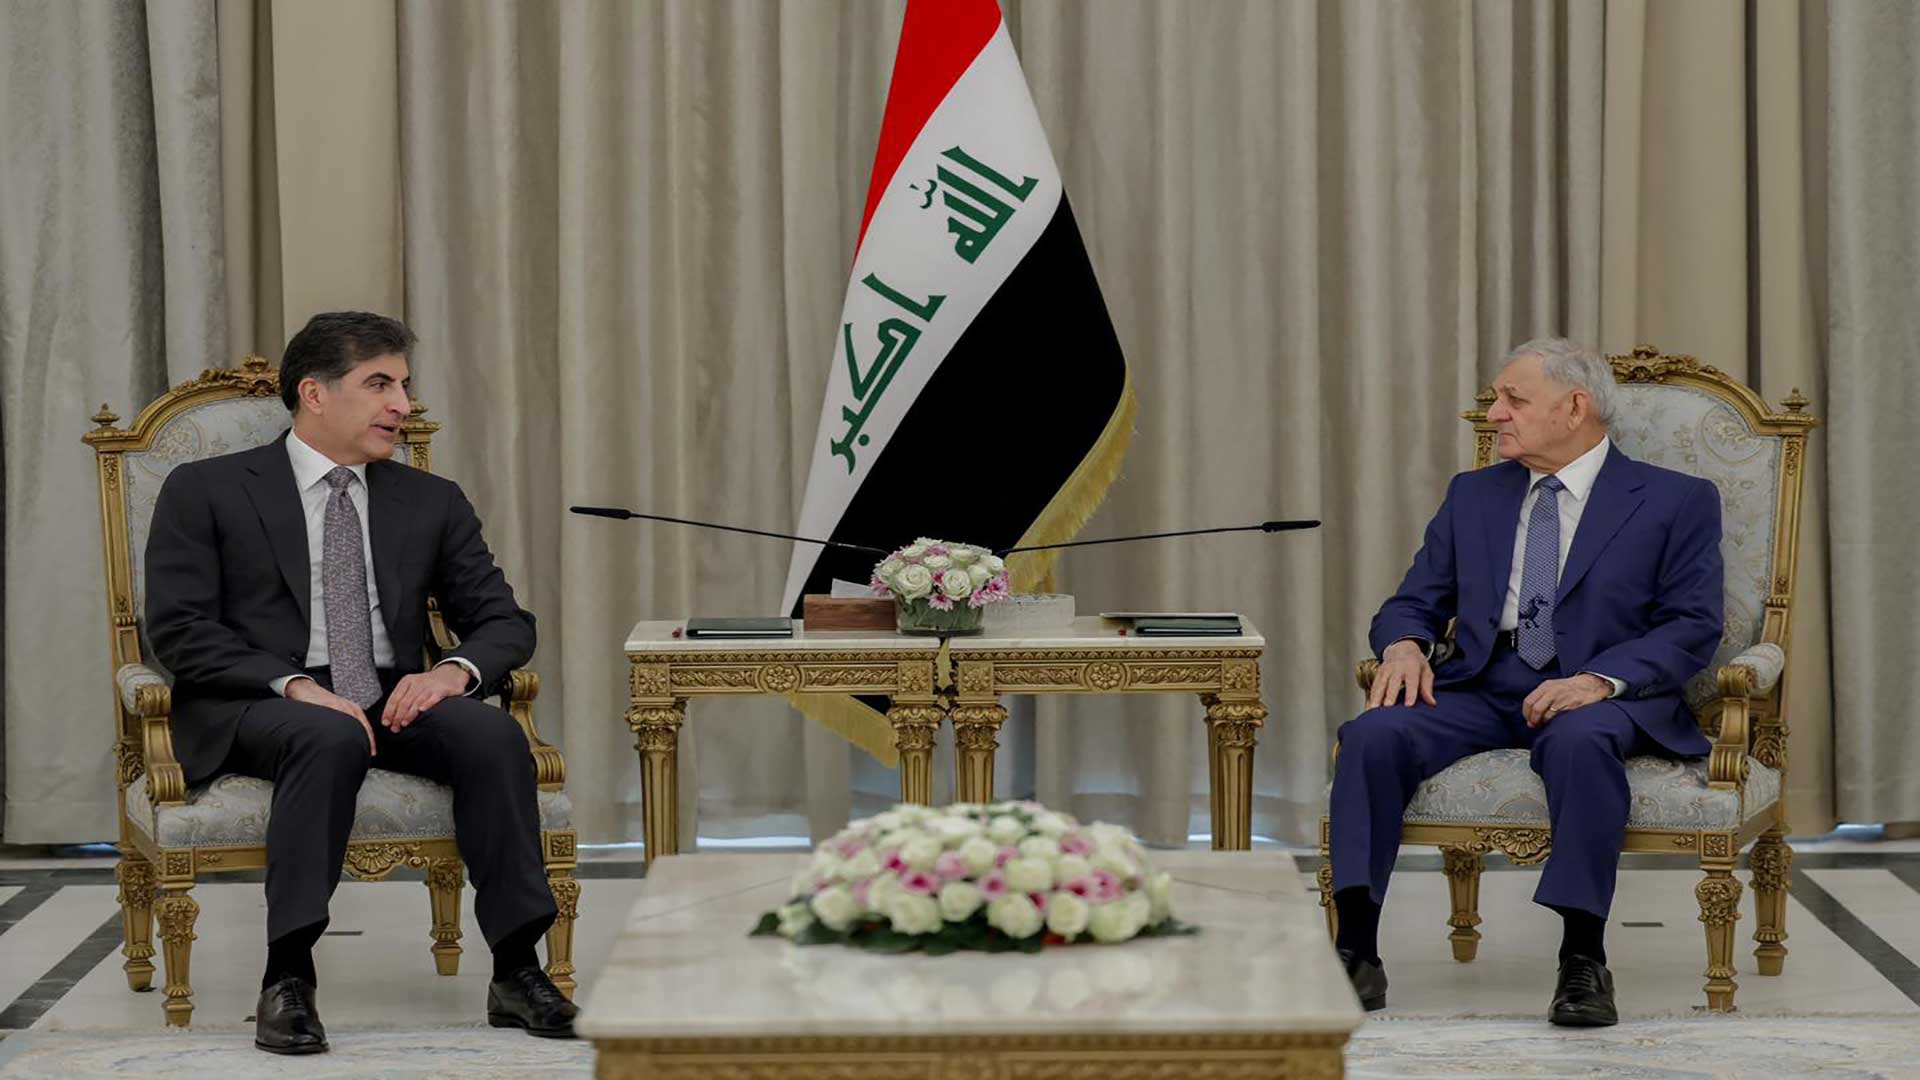  Iraqi President Abdullatif Jamal Rashid on the right and Kurdistan Region's President Nechirvan Barzani on the left.